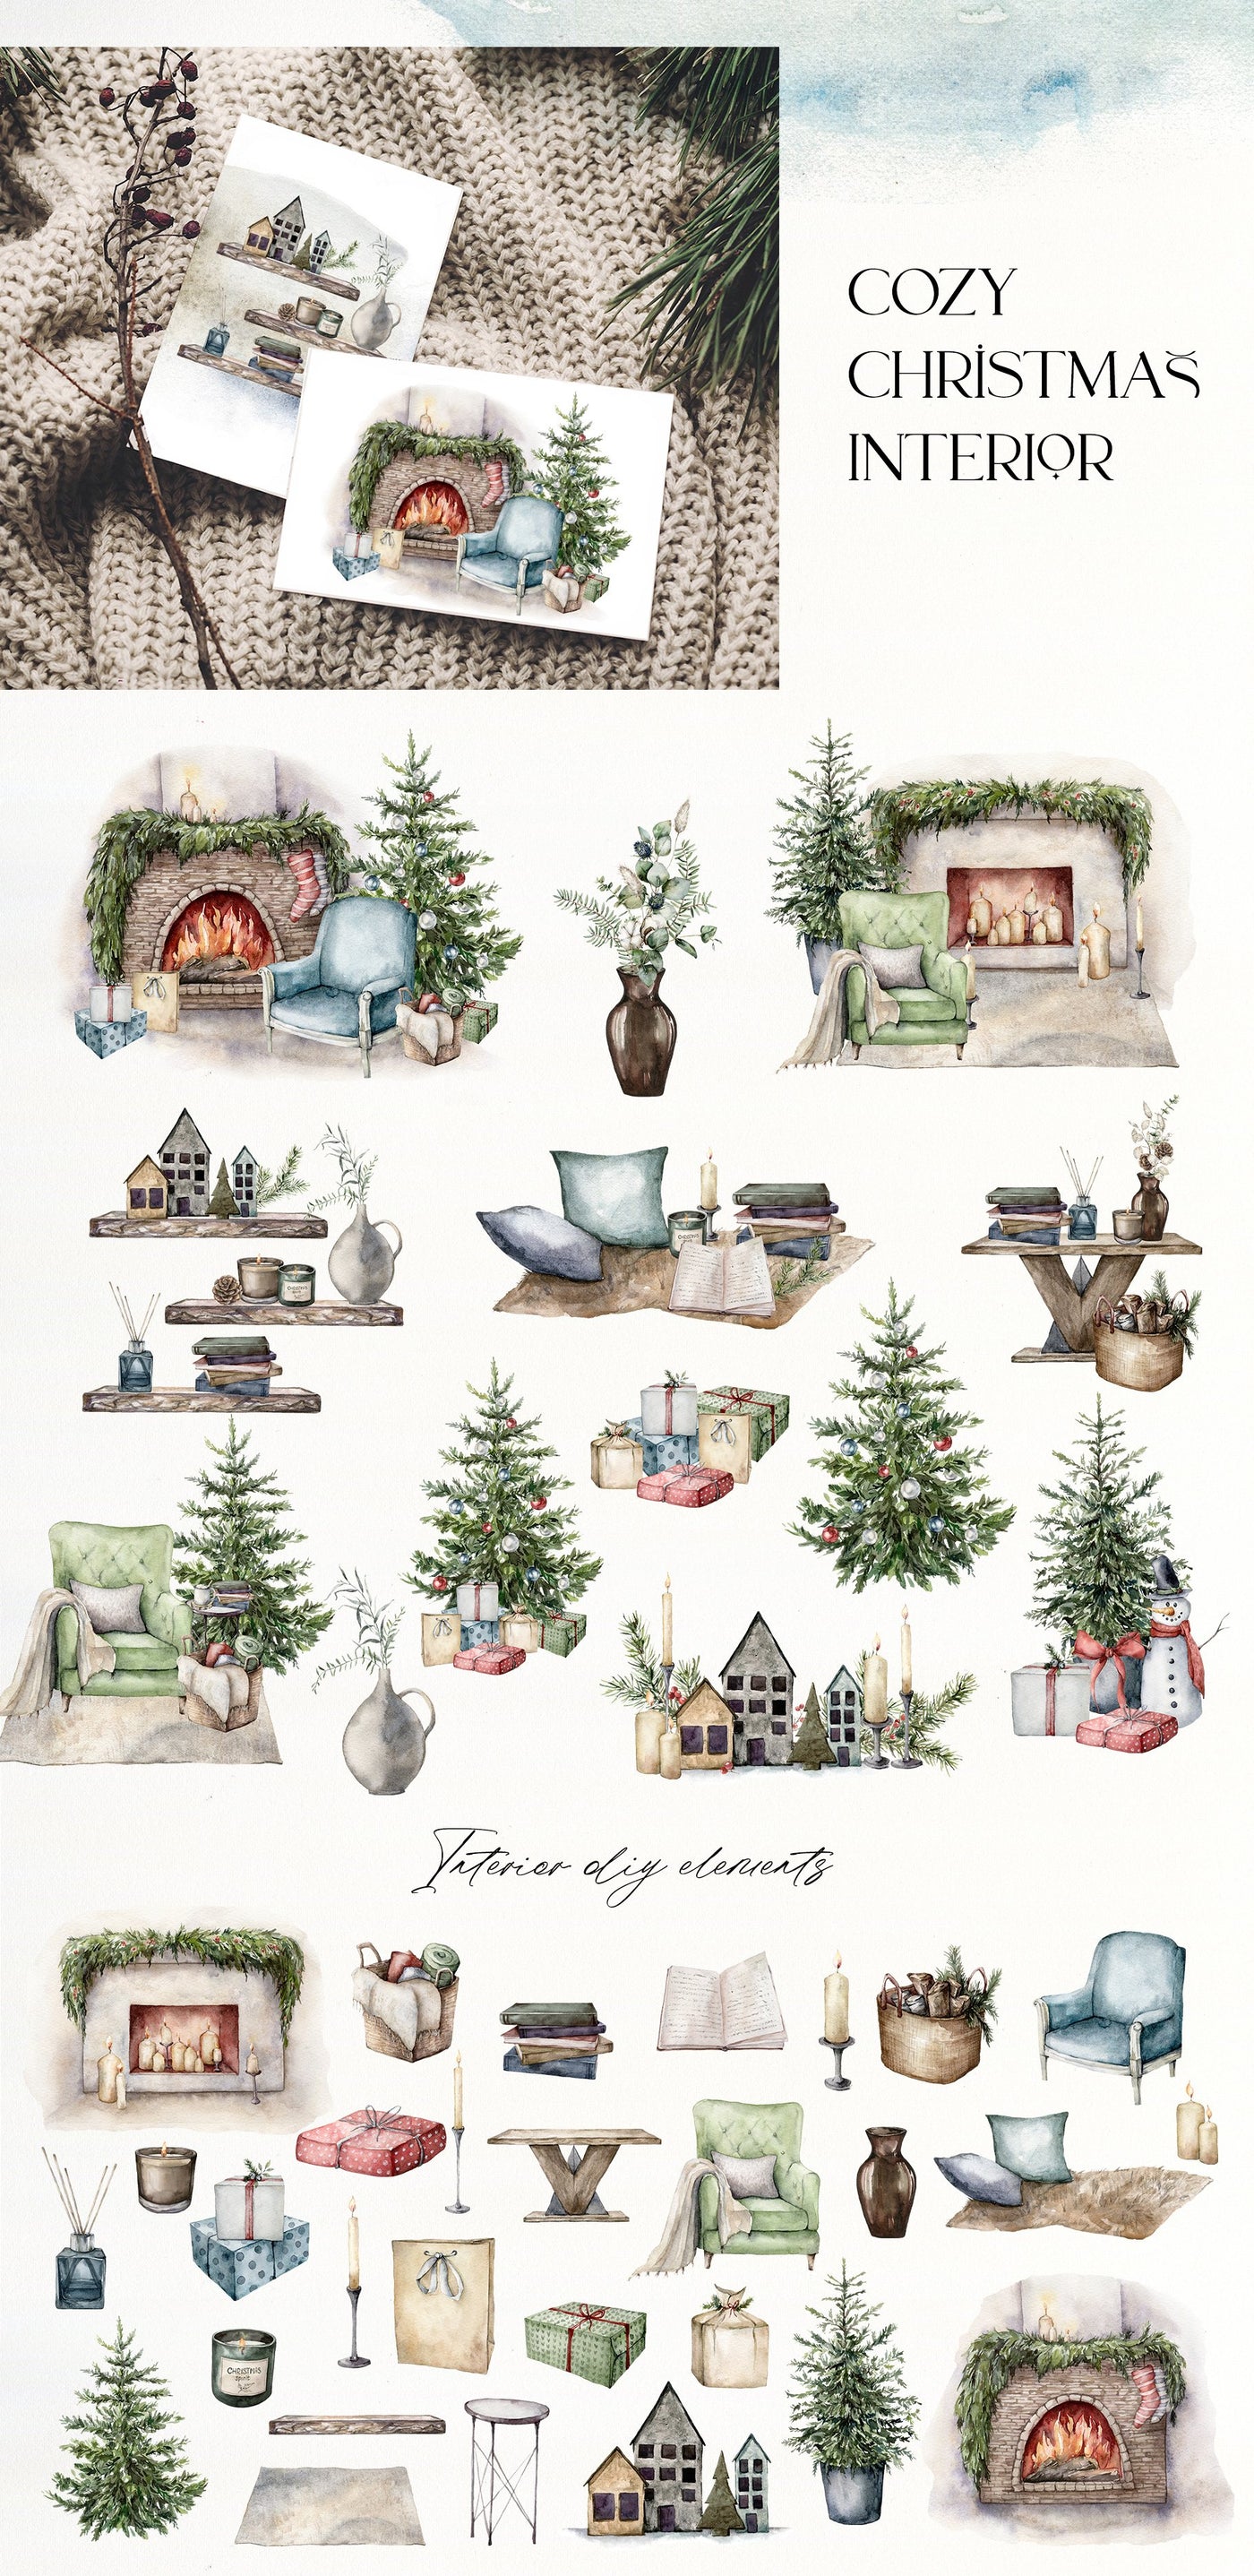 The Christmas Spirit Watercolor Bundle - Artixty